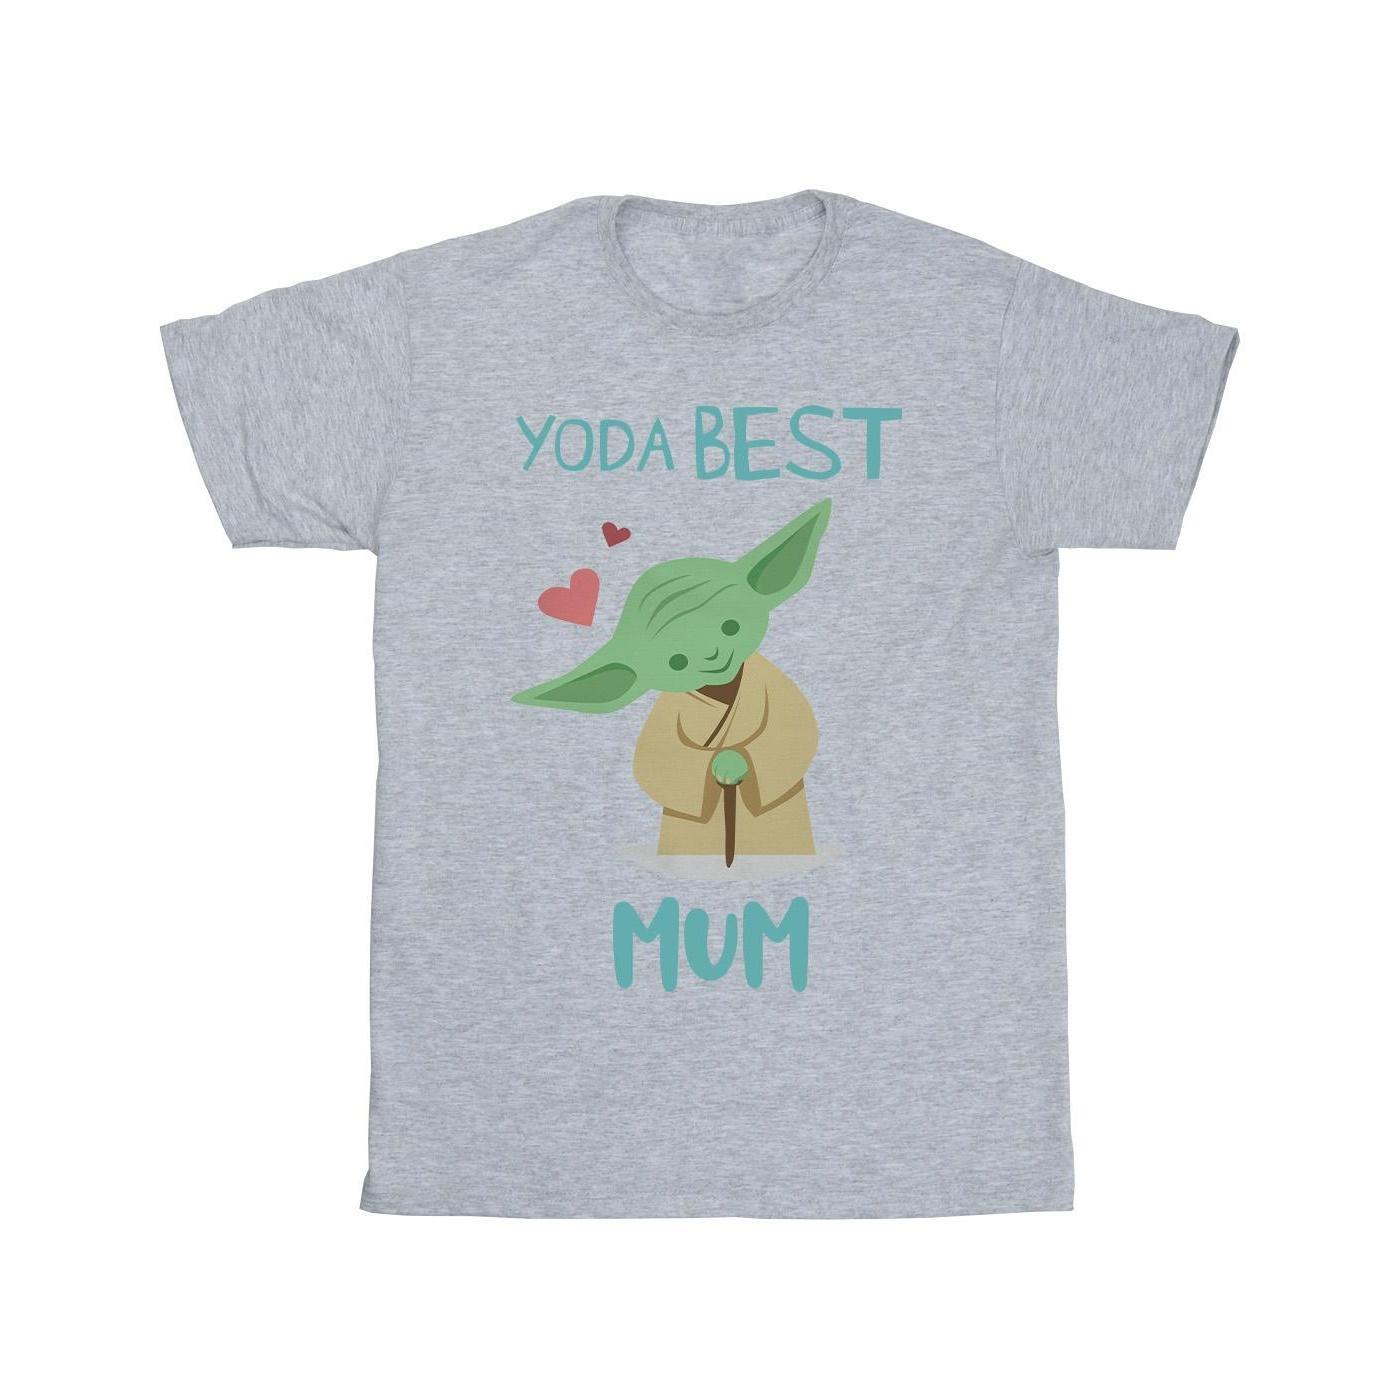 Star Wars Boys Yoda Best Mum T-Shirt (Sports Grey) (5-6 Years)